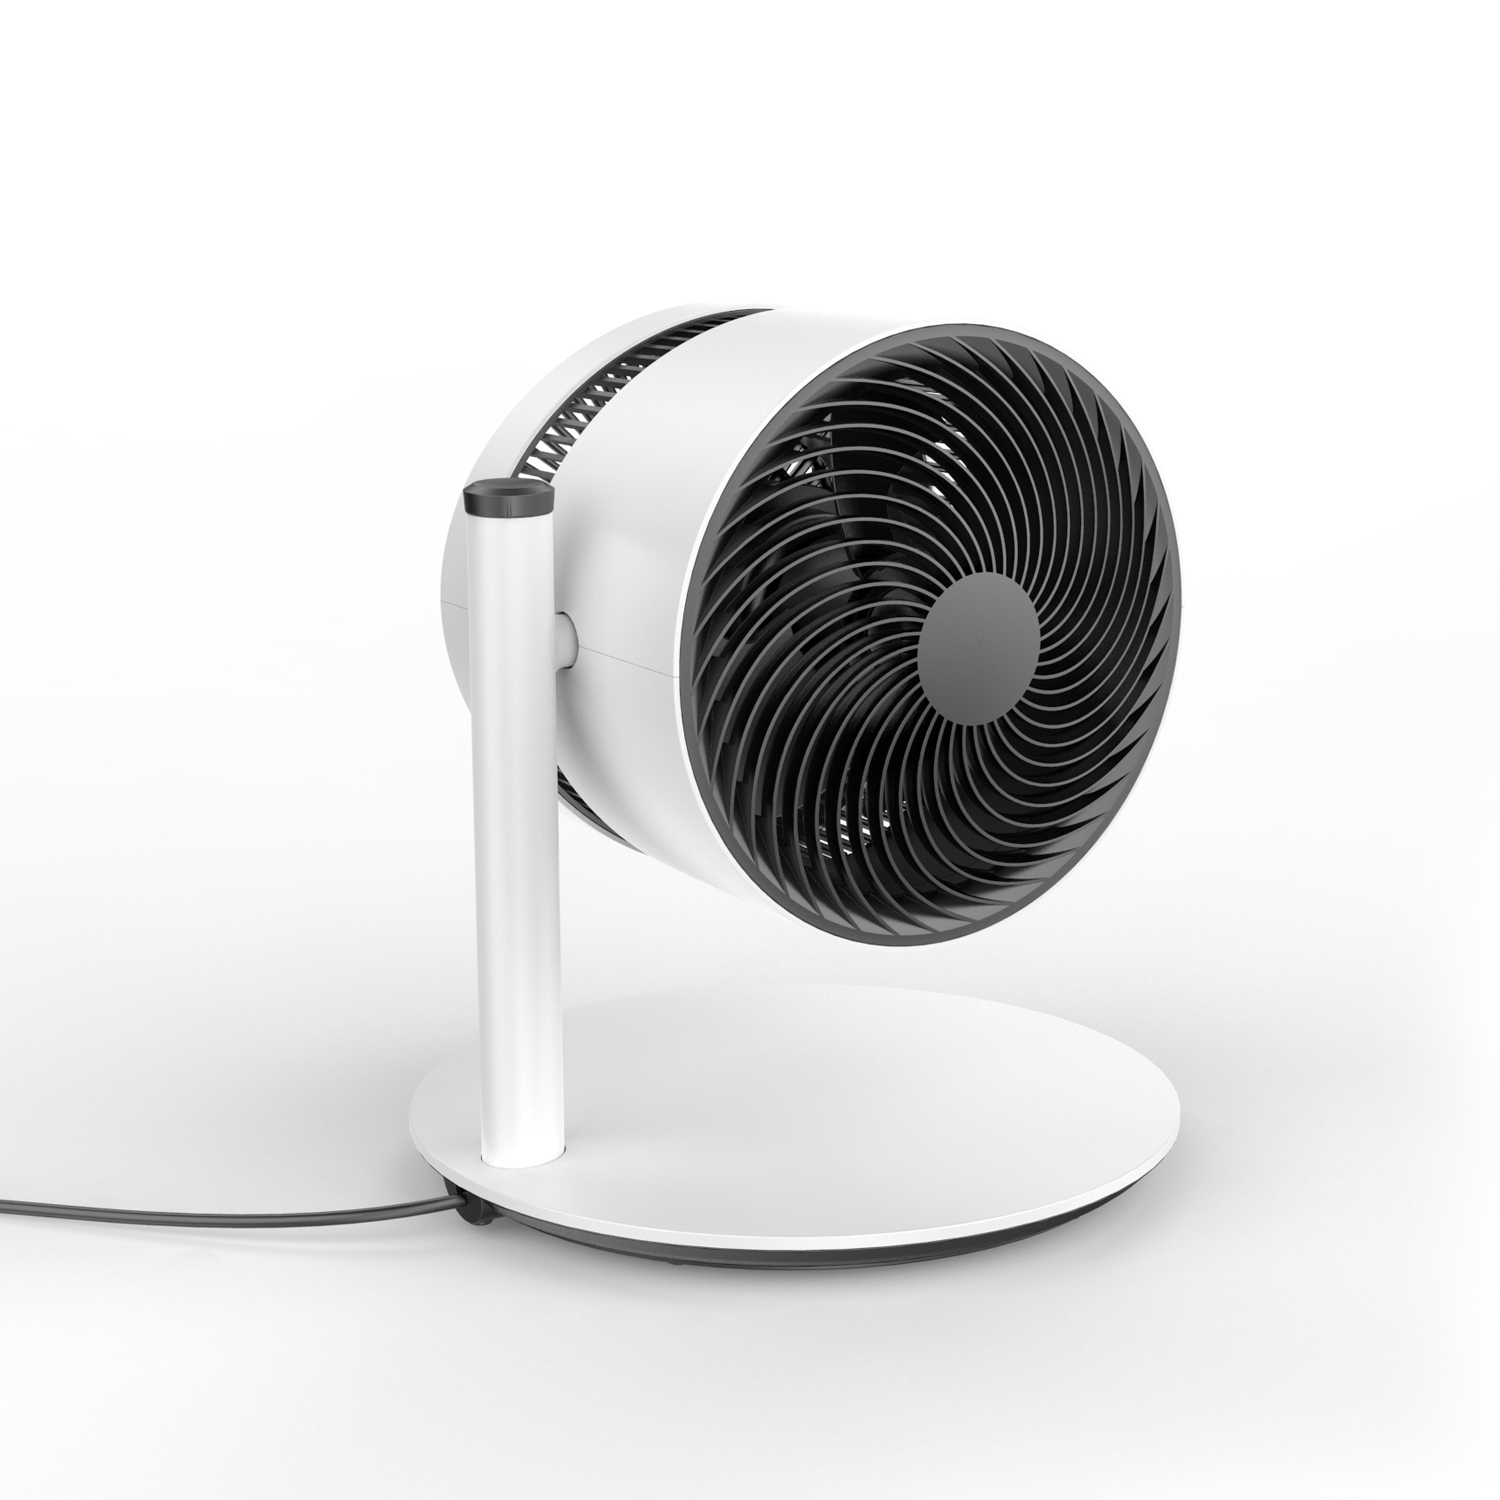 Industrial design render details of the new Boneco domestic fan range